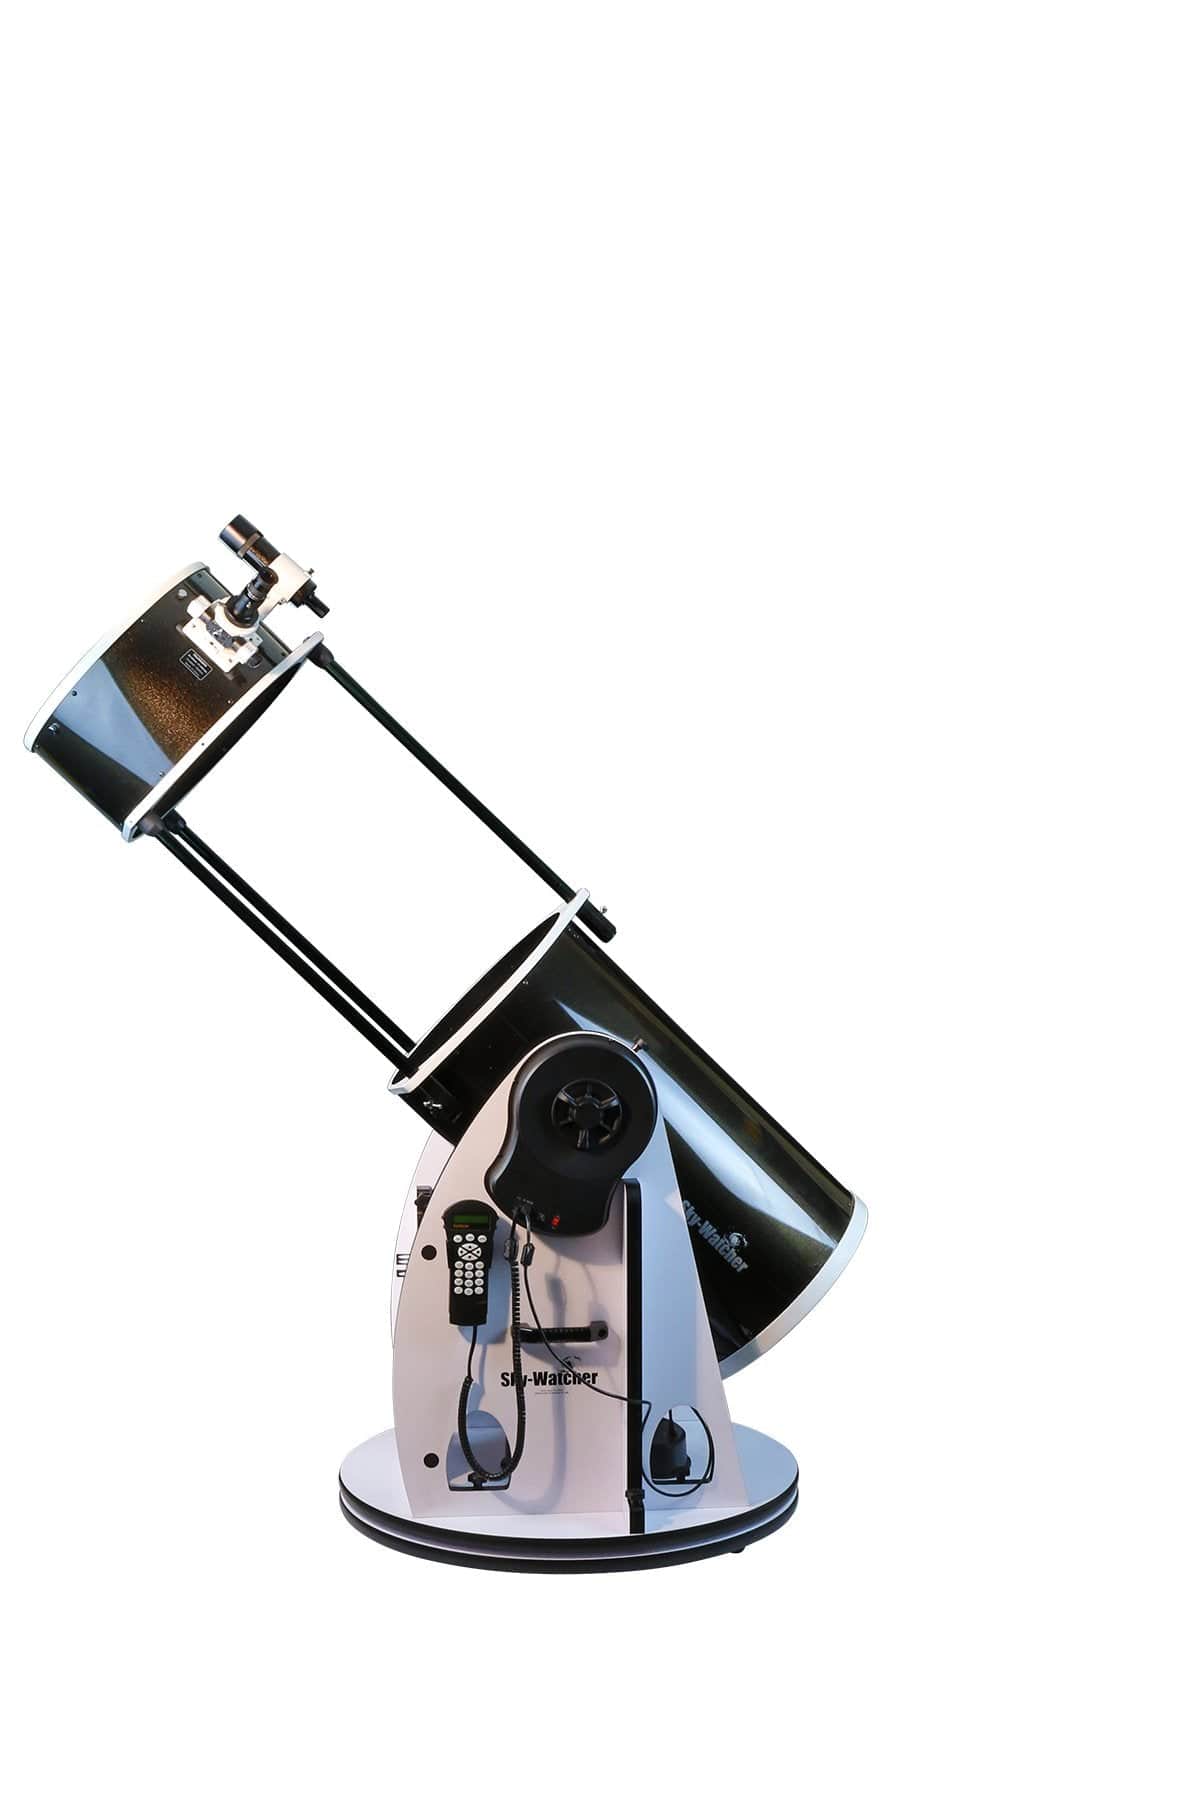 Sky-Watcher Telescope Sky-Watcher Flextube 400P 16" SynScan GoTo Collapsible Dobsonian